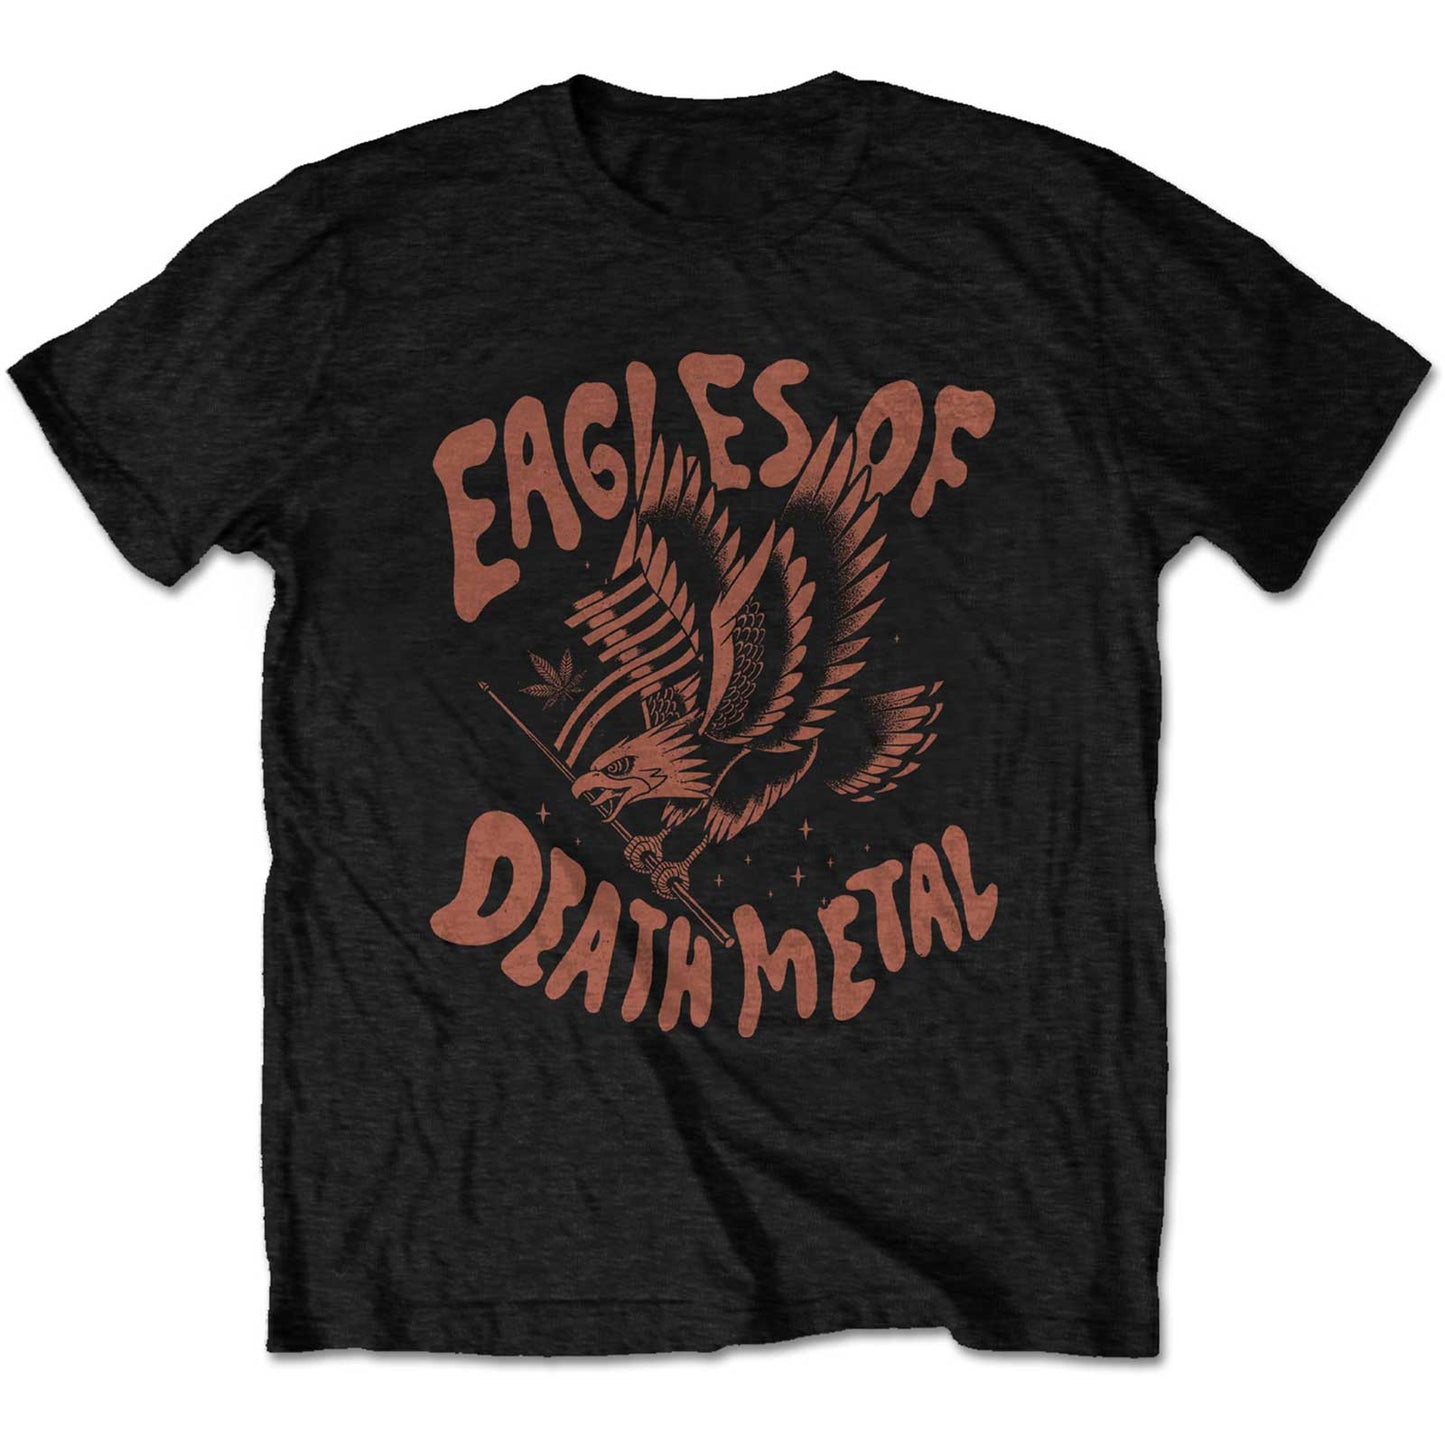 Eagles of Death Metal Unisex T-Shirt: Eagle